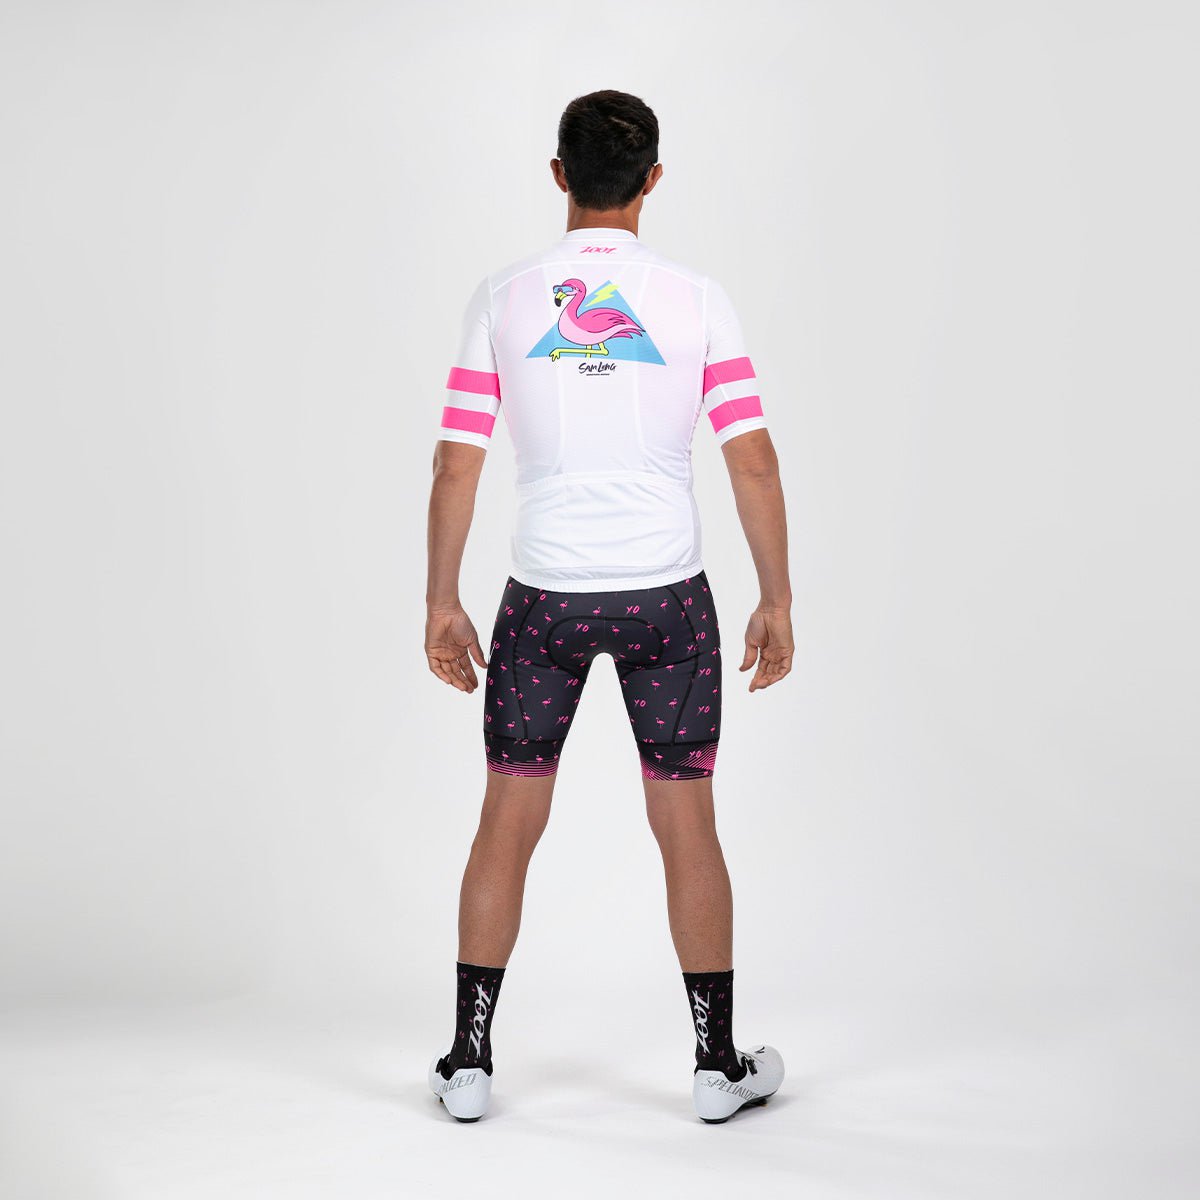 Zoot Sports CYCLE JERSEYS Men's Ltd Cycle Aero Jersey - Flamingo